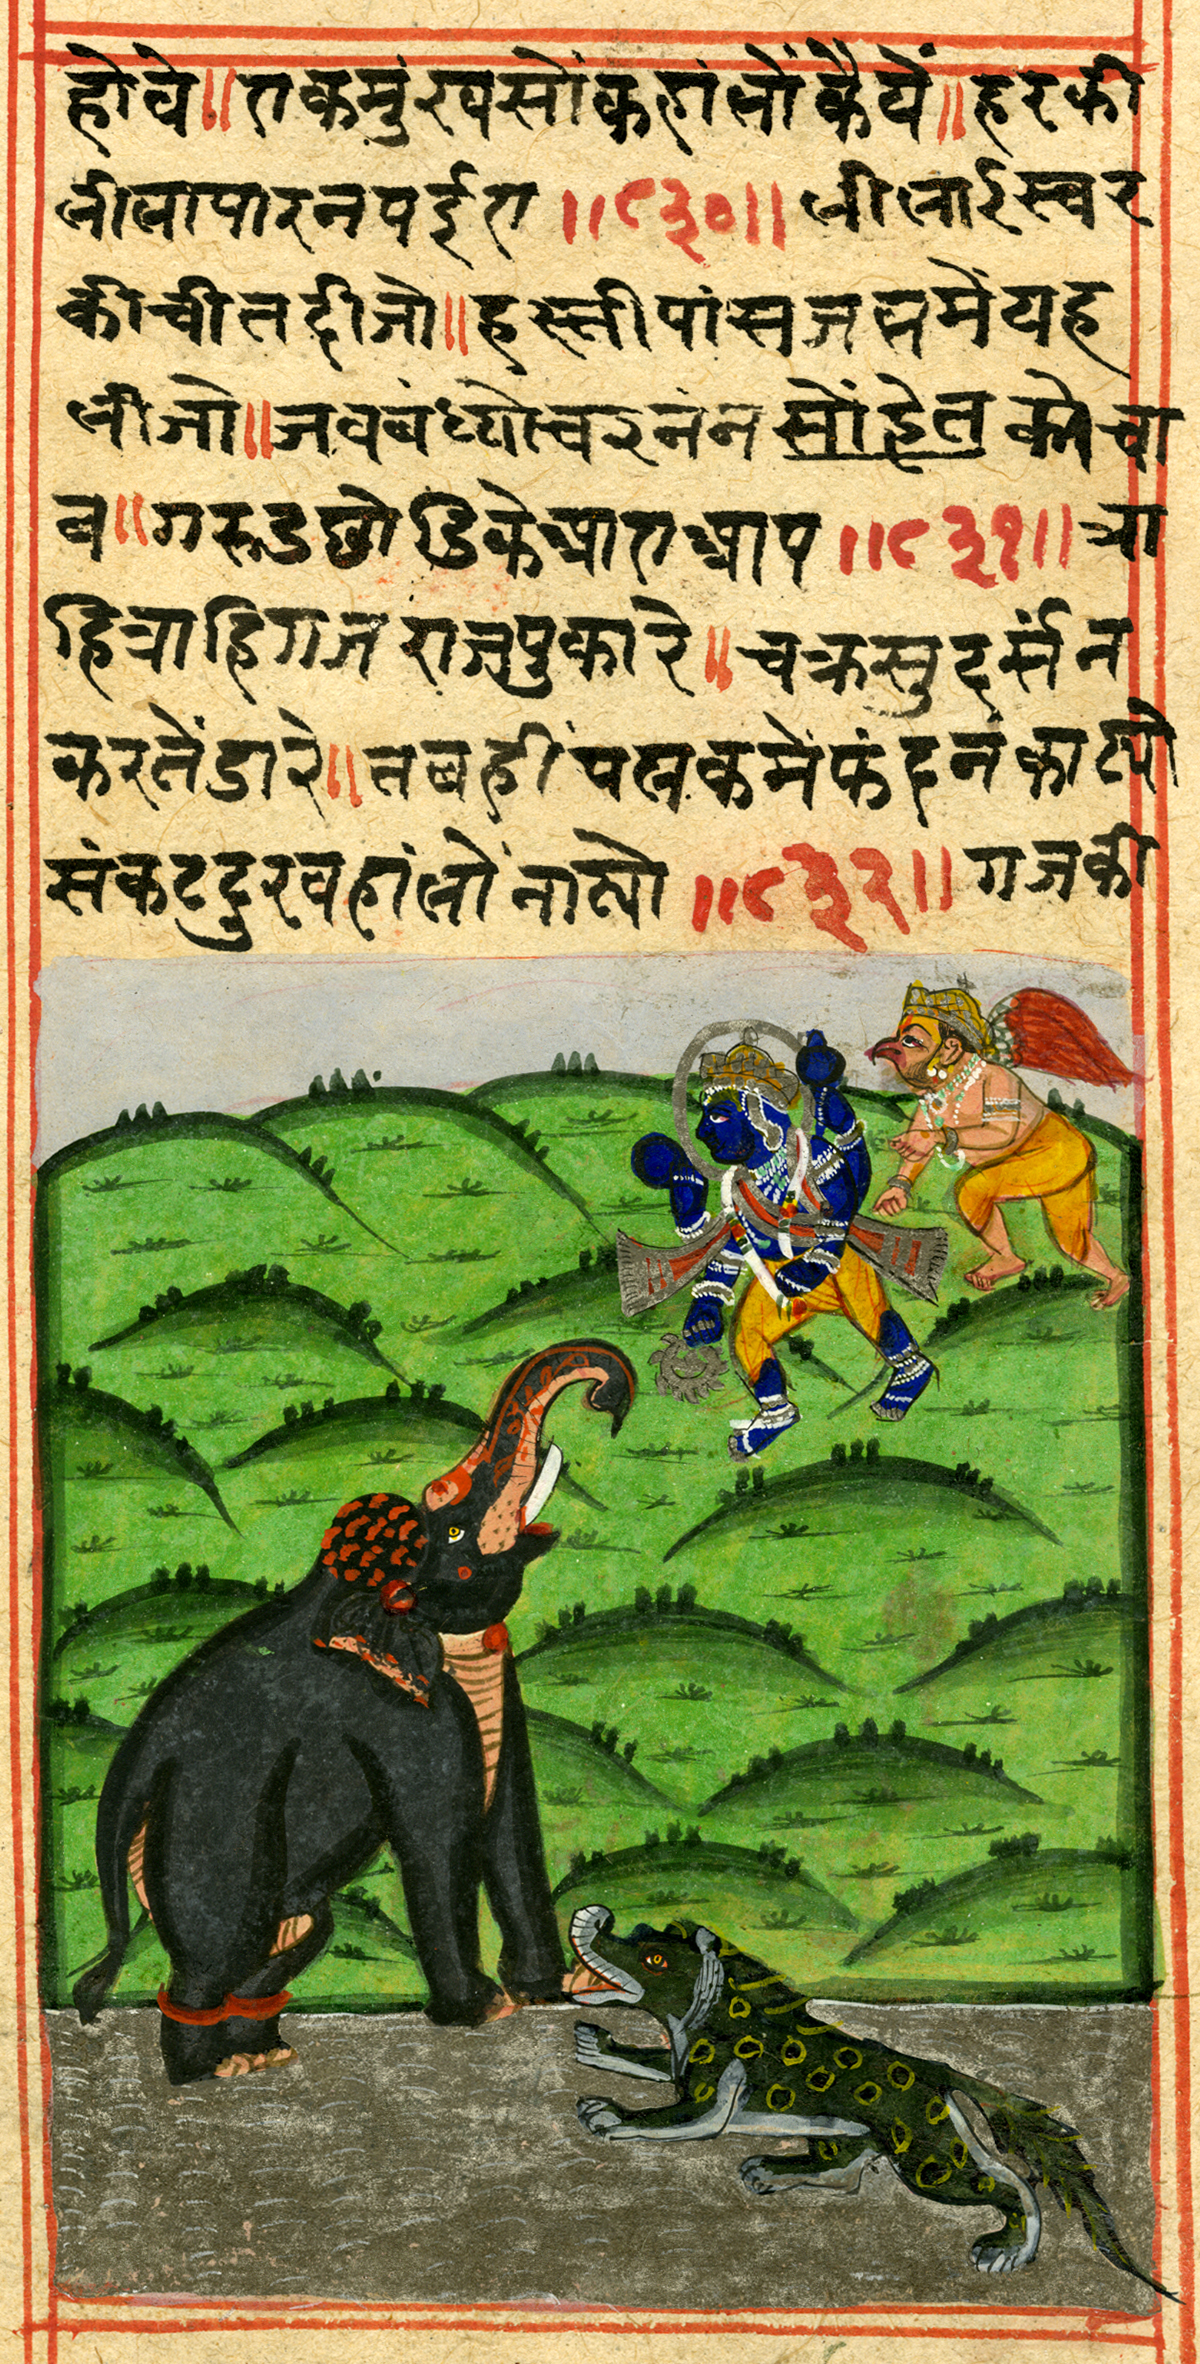 Vishnu and Garunda: Episode of Gajendra Moksha (salvation of the Elephant King) from Bhagavata Purana